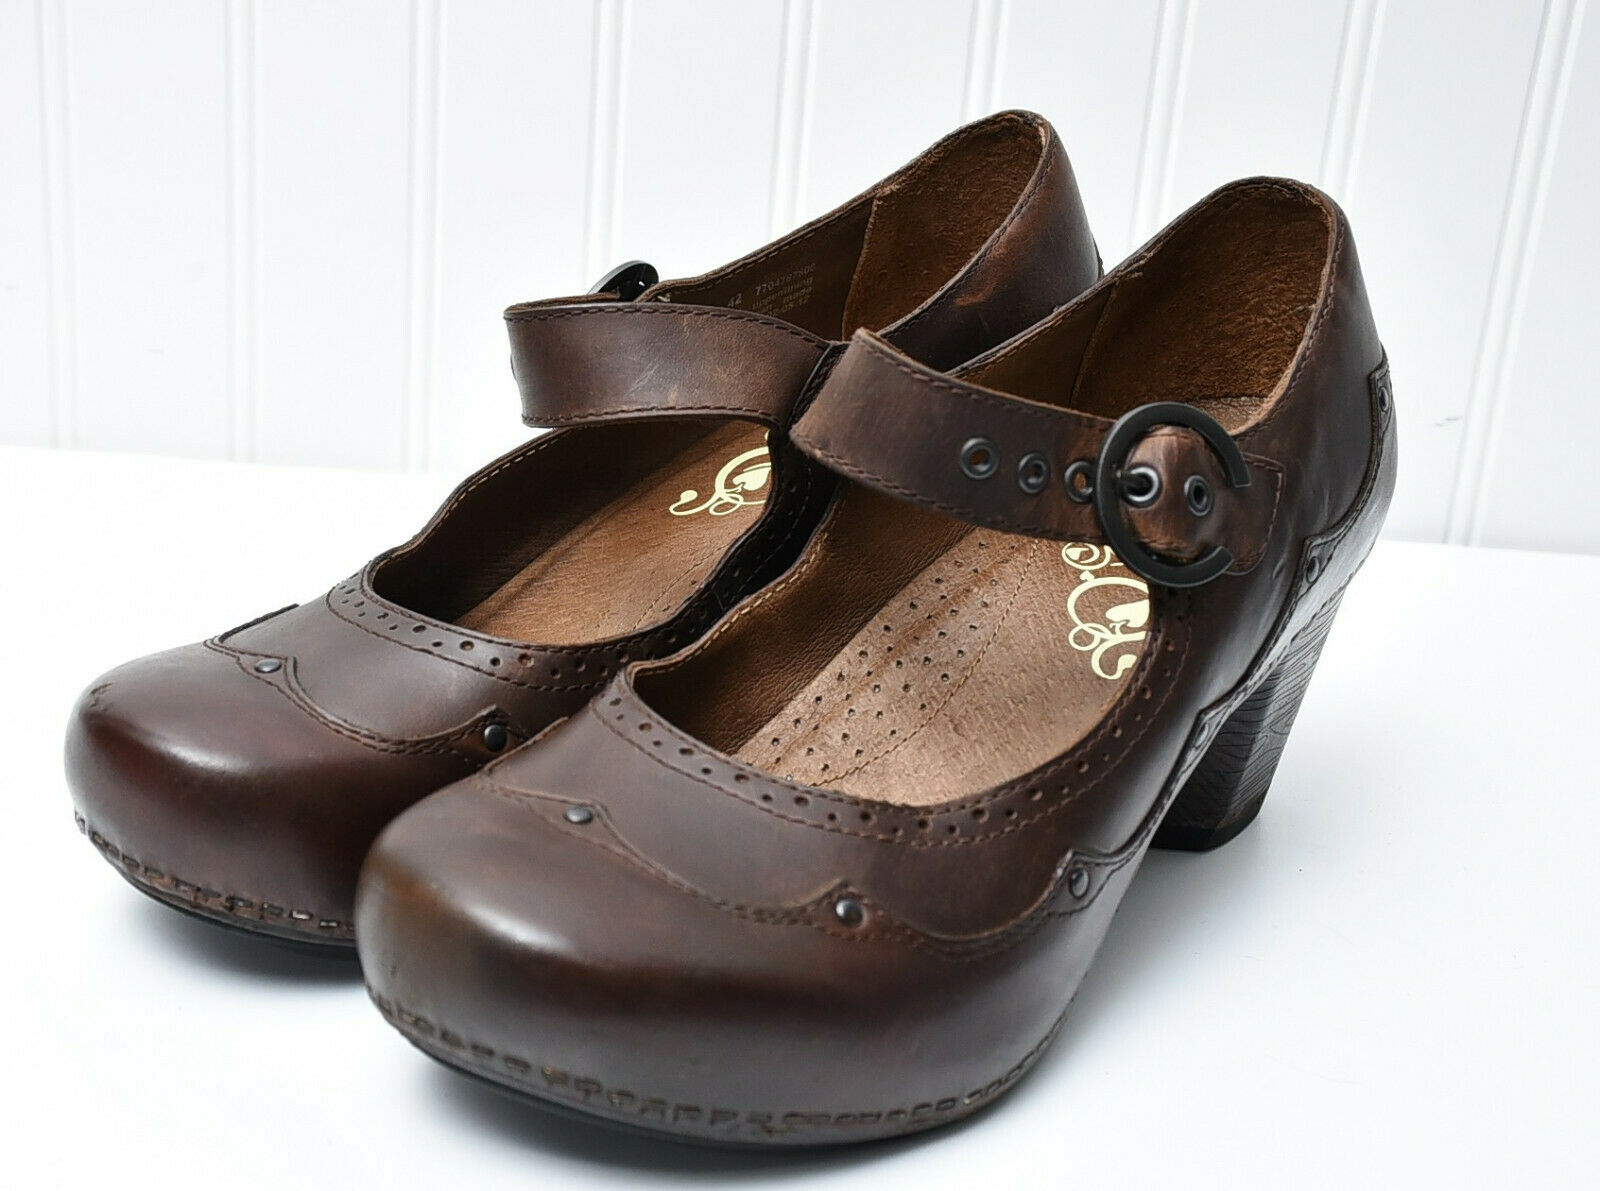 Dansko Babette Comfort Leather Maryjane Straps Pumps Dress Shoes Sz 42 12